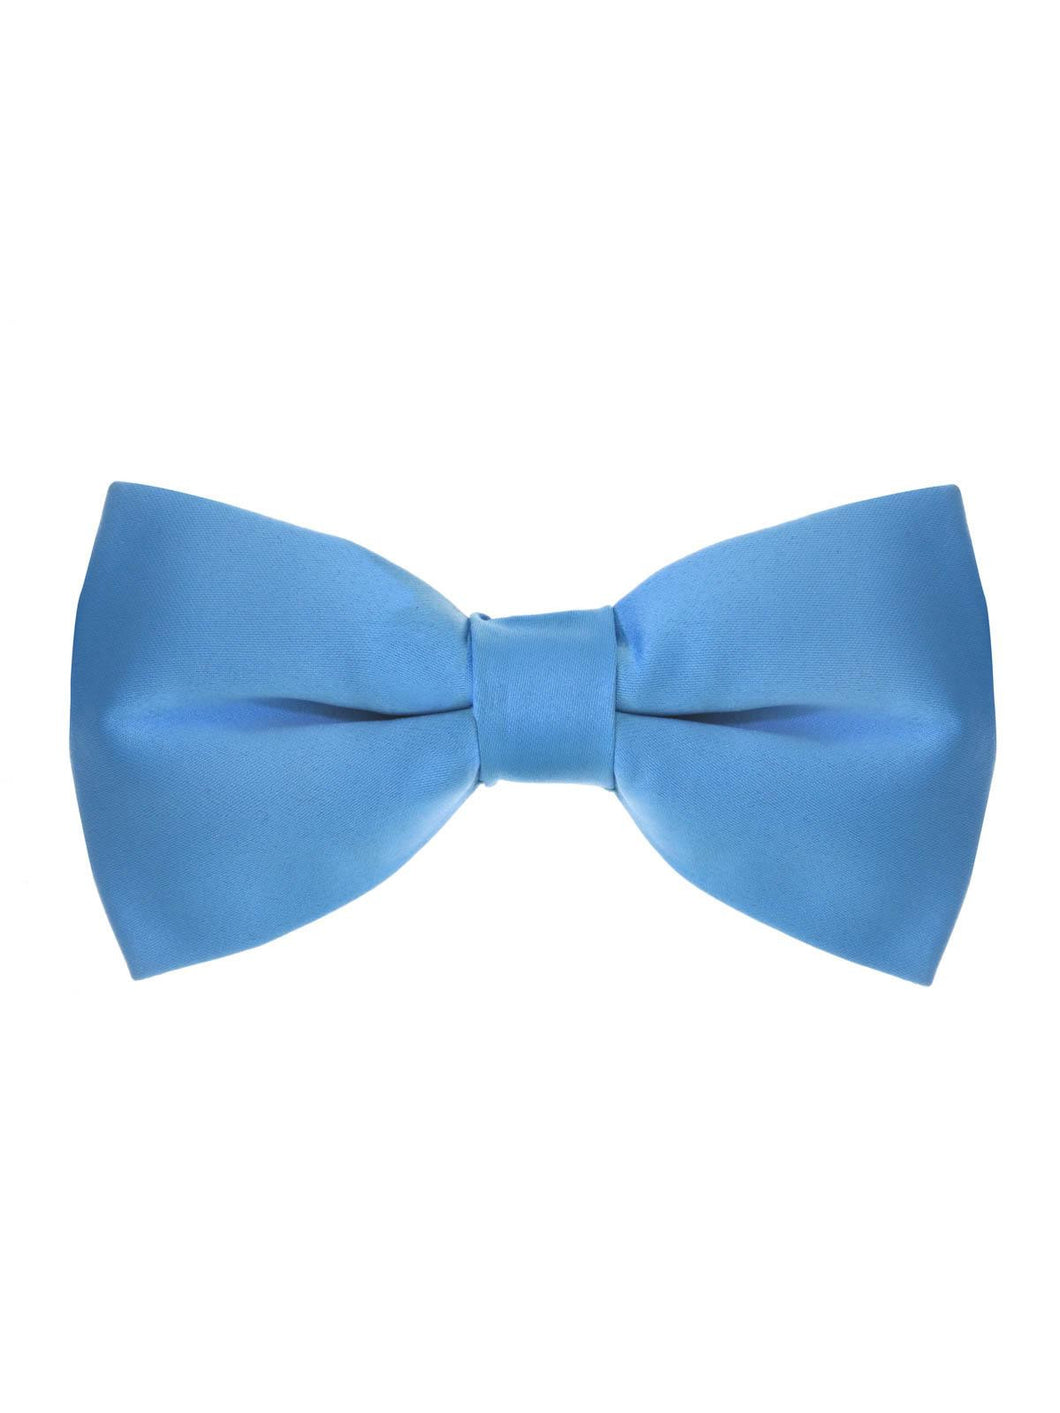 Men's Classic Pre-Tied Formal Tuxedo Bow Tie - Light Blue